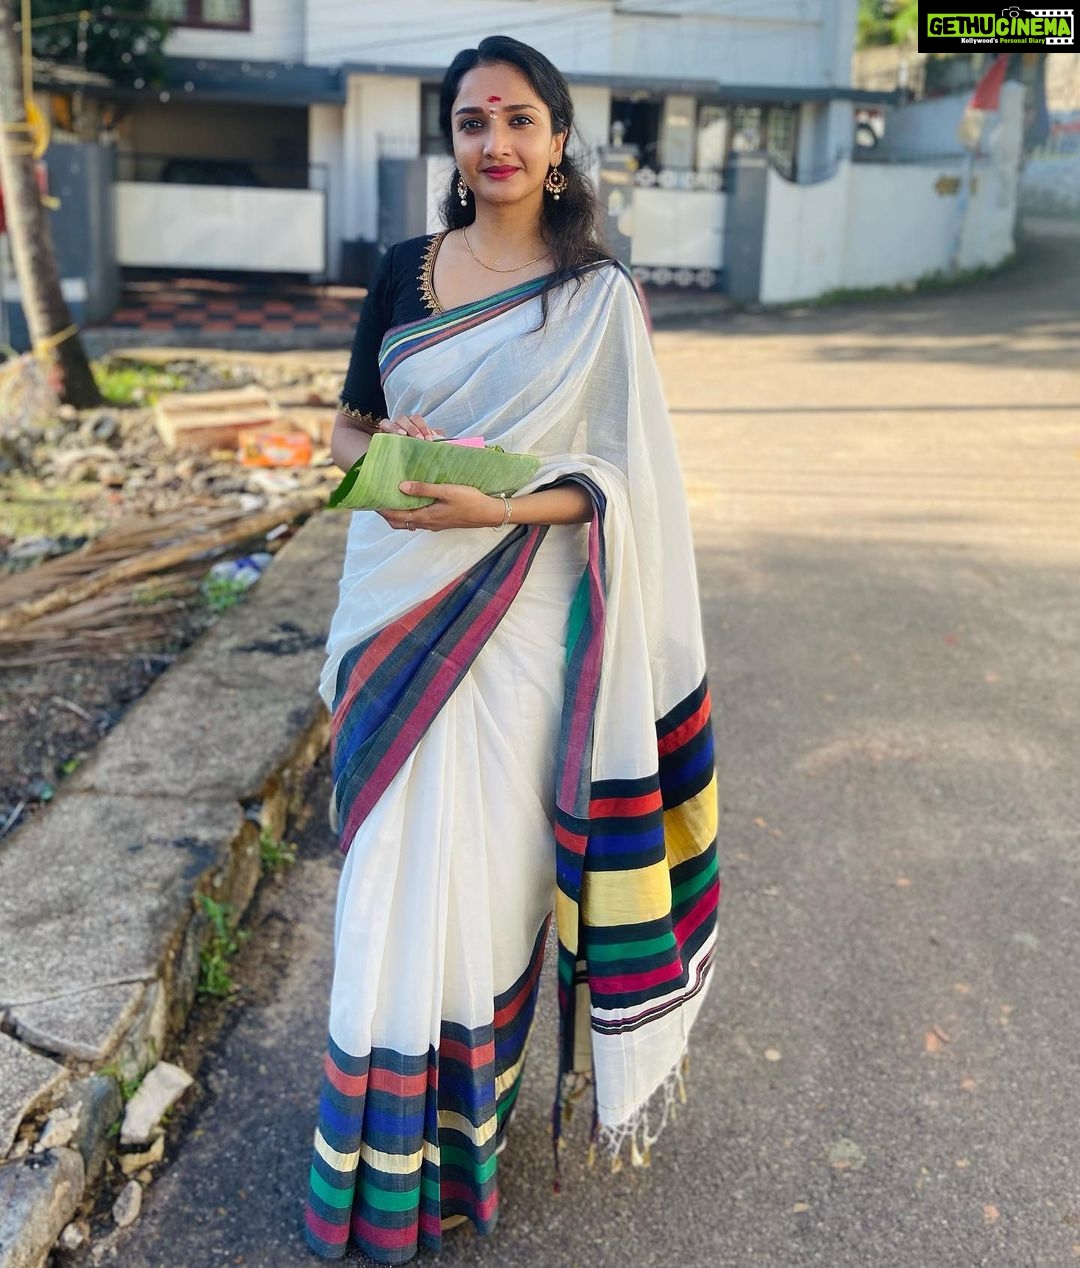 Actress Surabhi Santosh HD Photos and Wallpapers May 2022 | Gethu Cinema